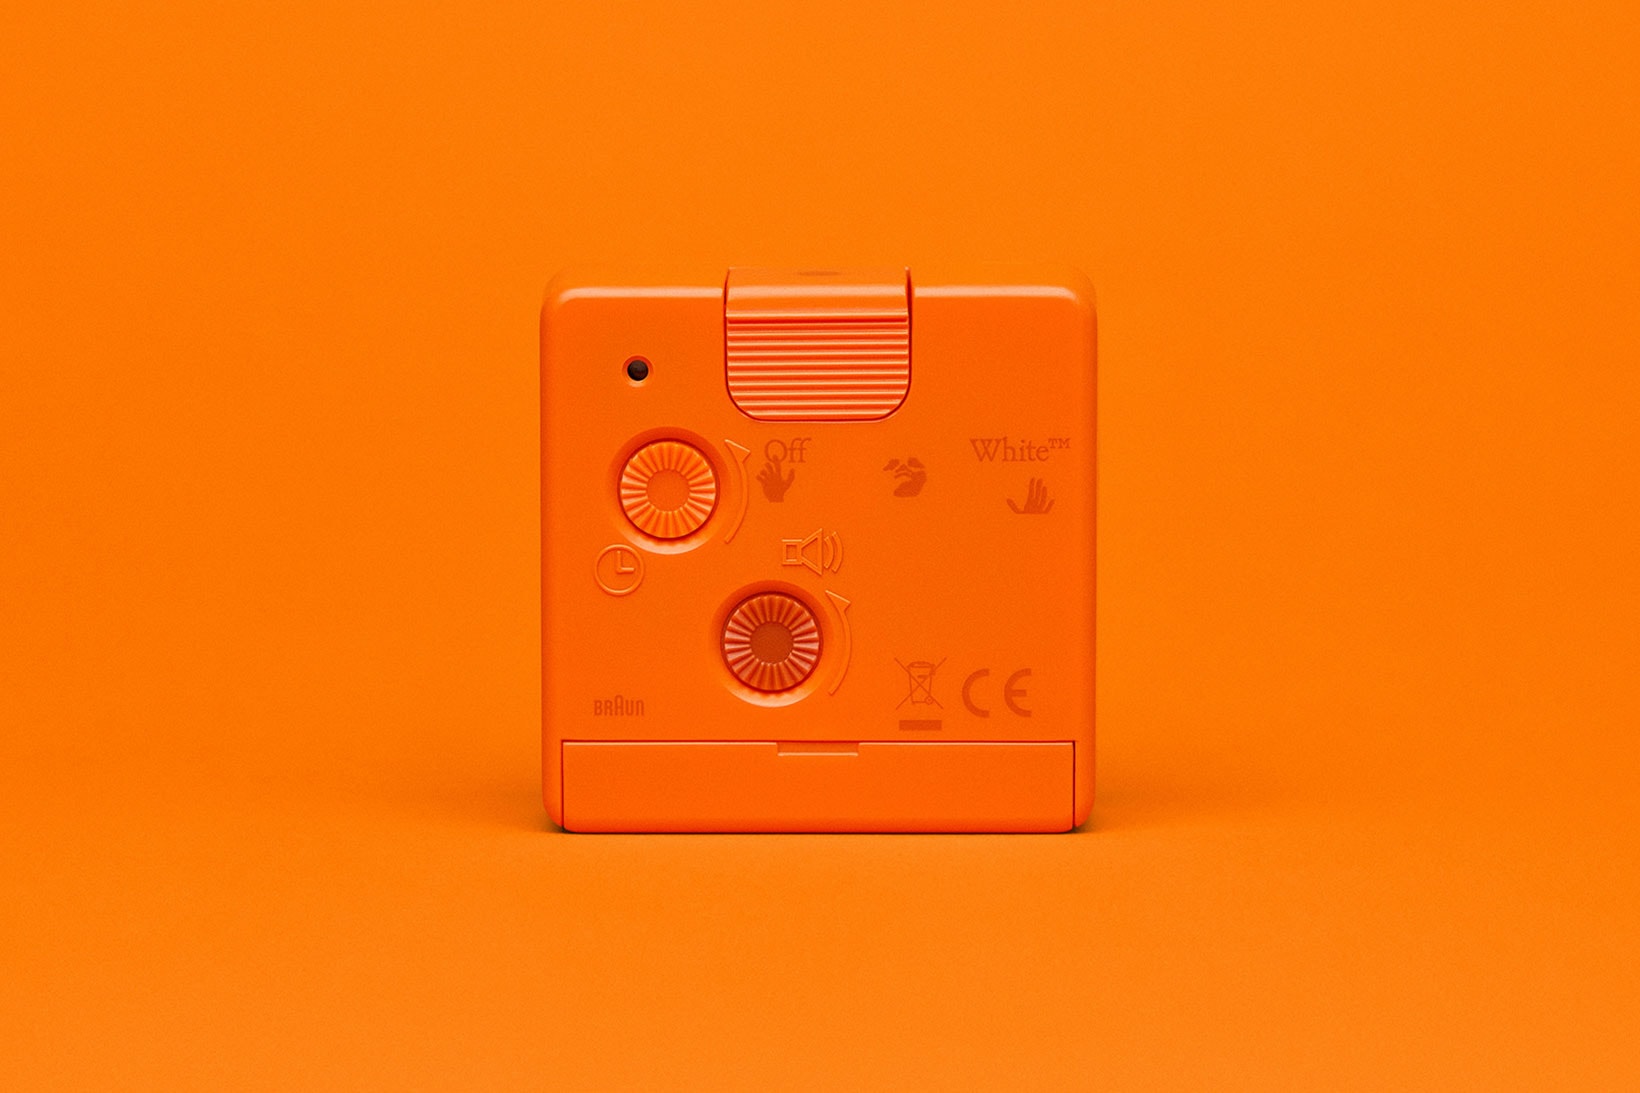 off-white braun alarm clocks collaboration home decor accessories orange back details buttons